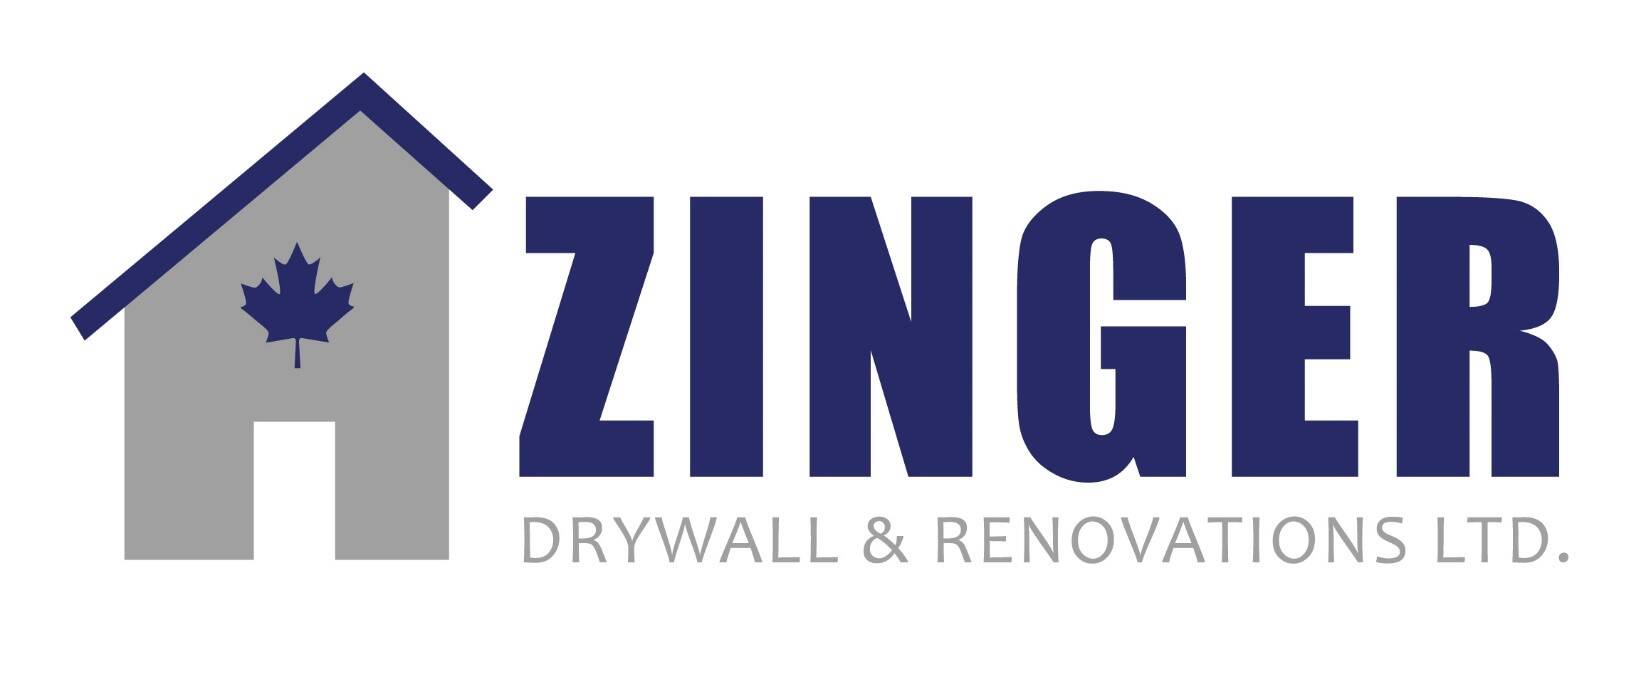 Zinger Drywall and Renovations Ltd.